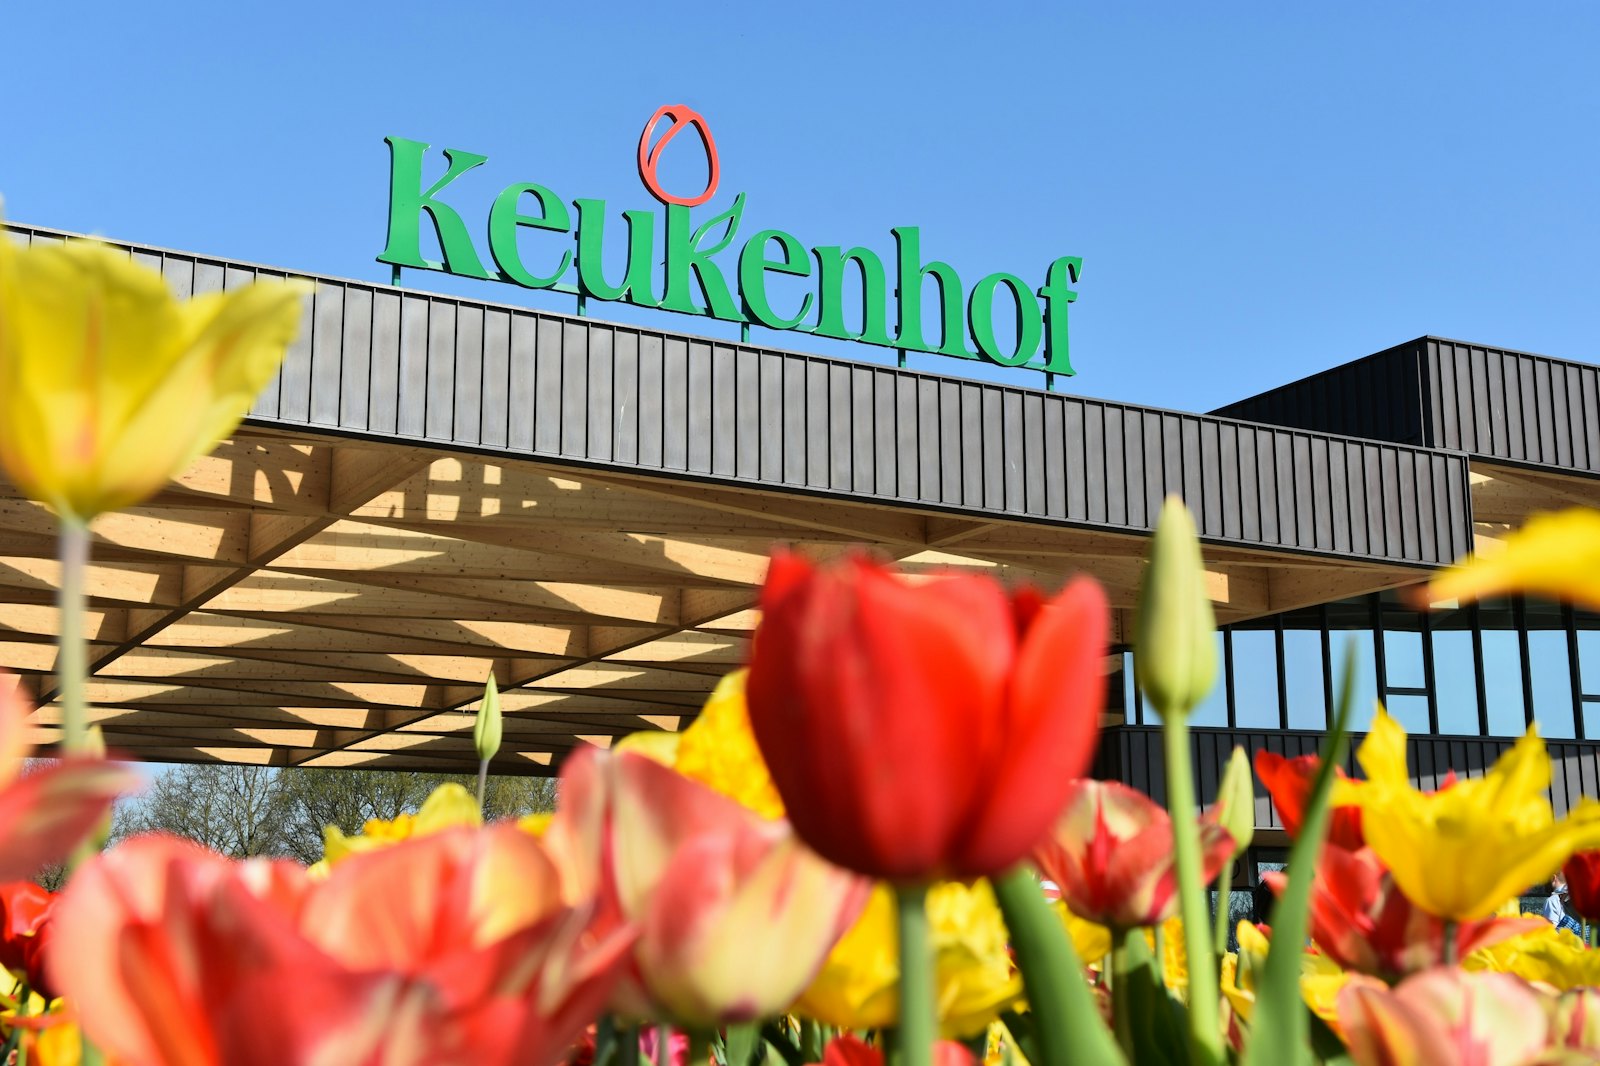 Photo of flowers in front of Keukenhof